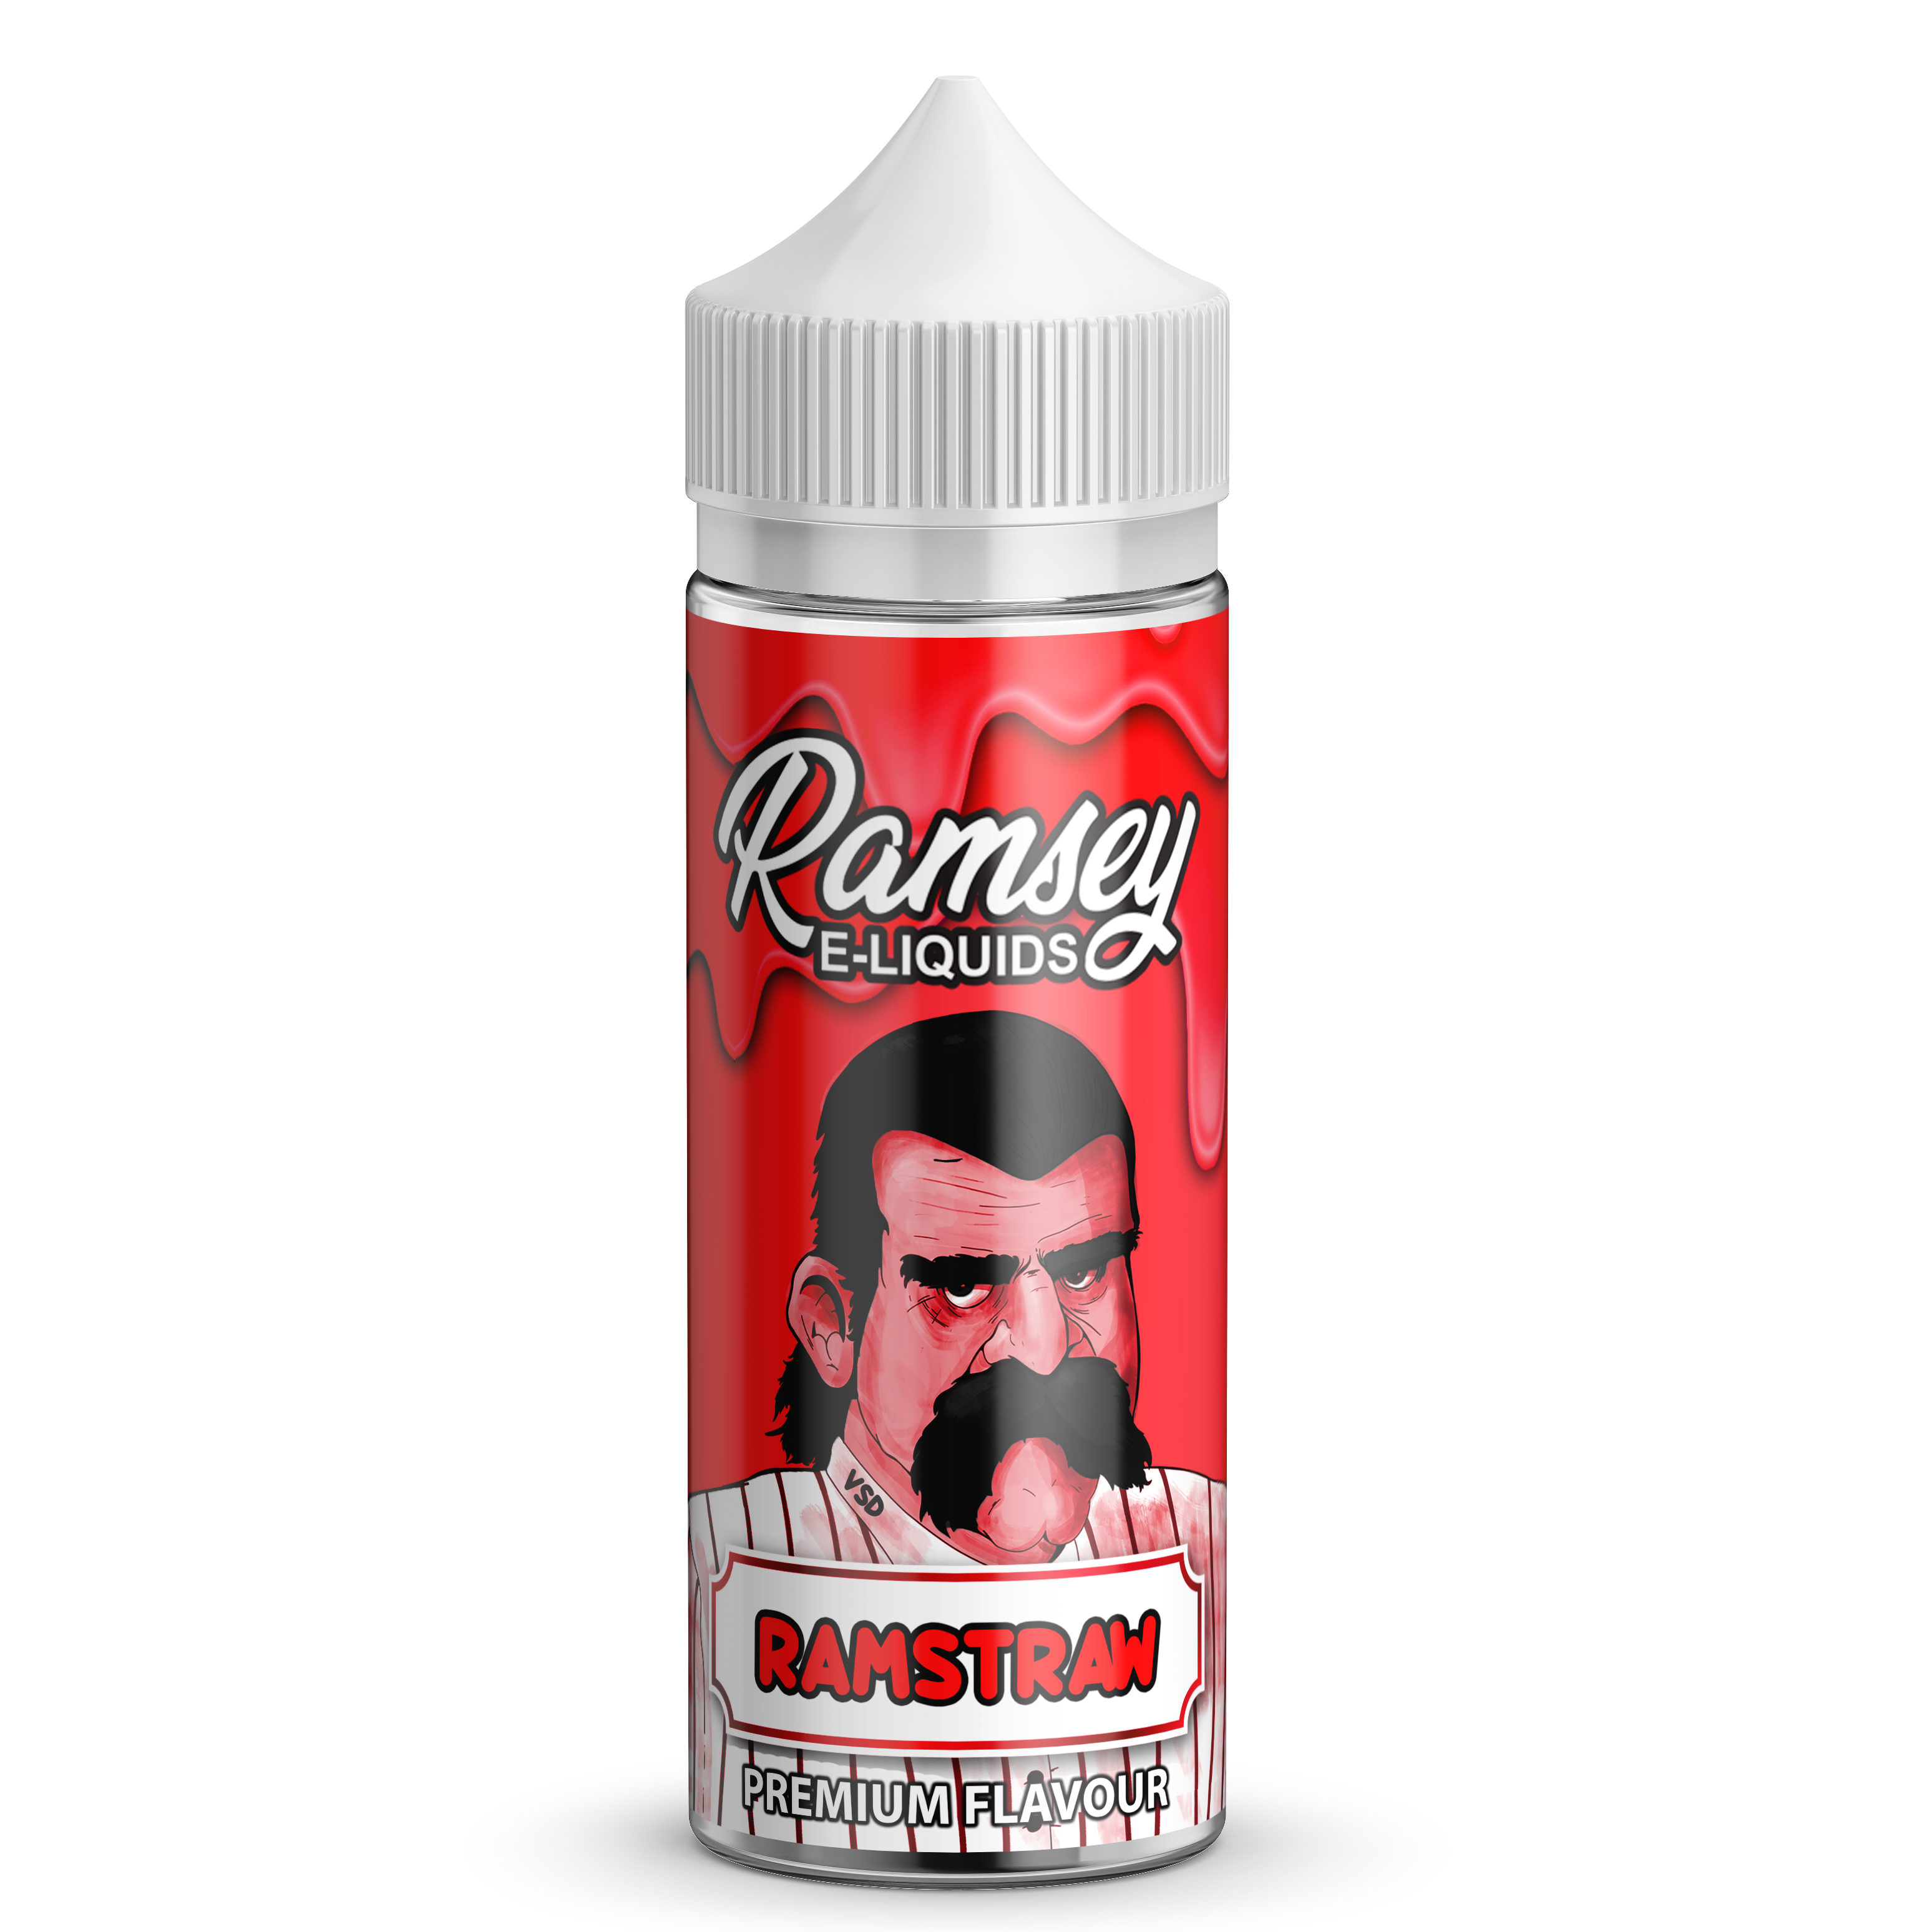 Ramsey E-Liquids Ramsstraw 0mg 100ml Shortfill E-Liquid